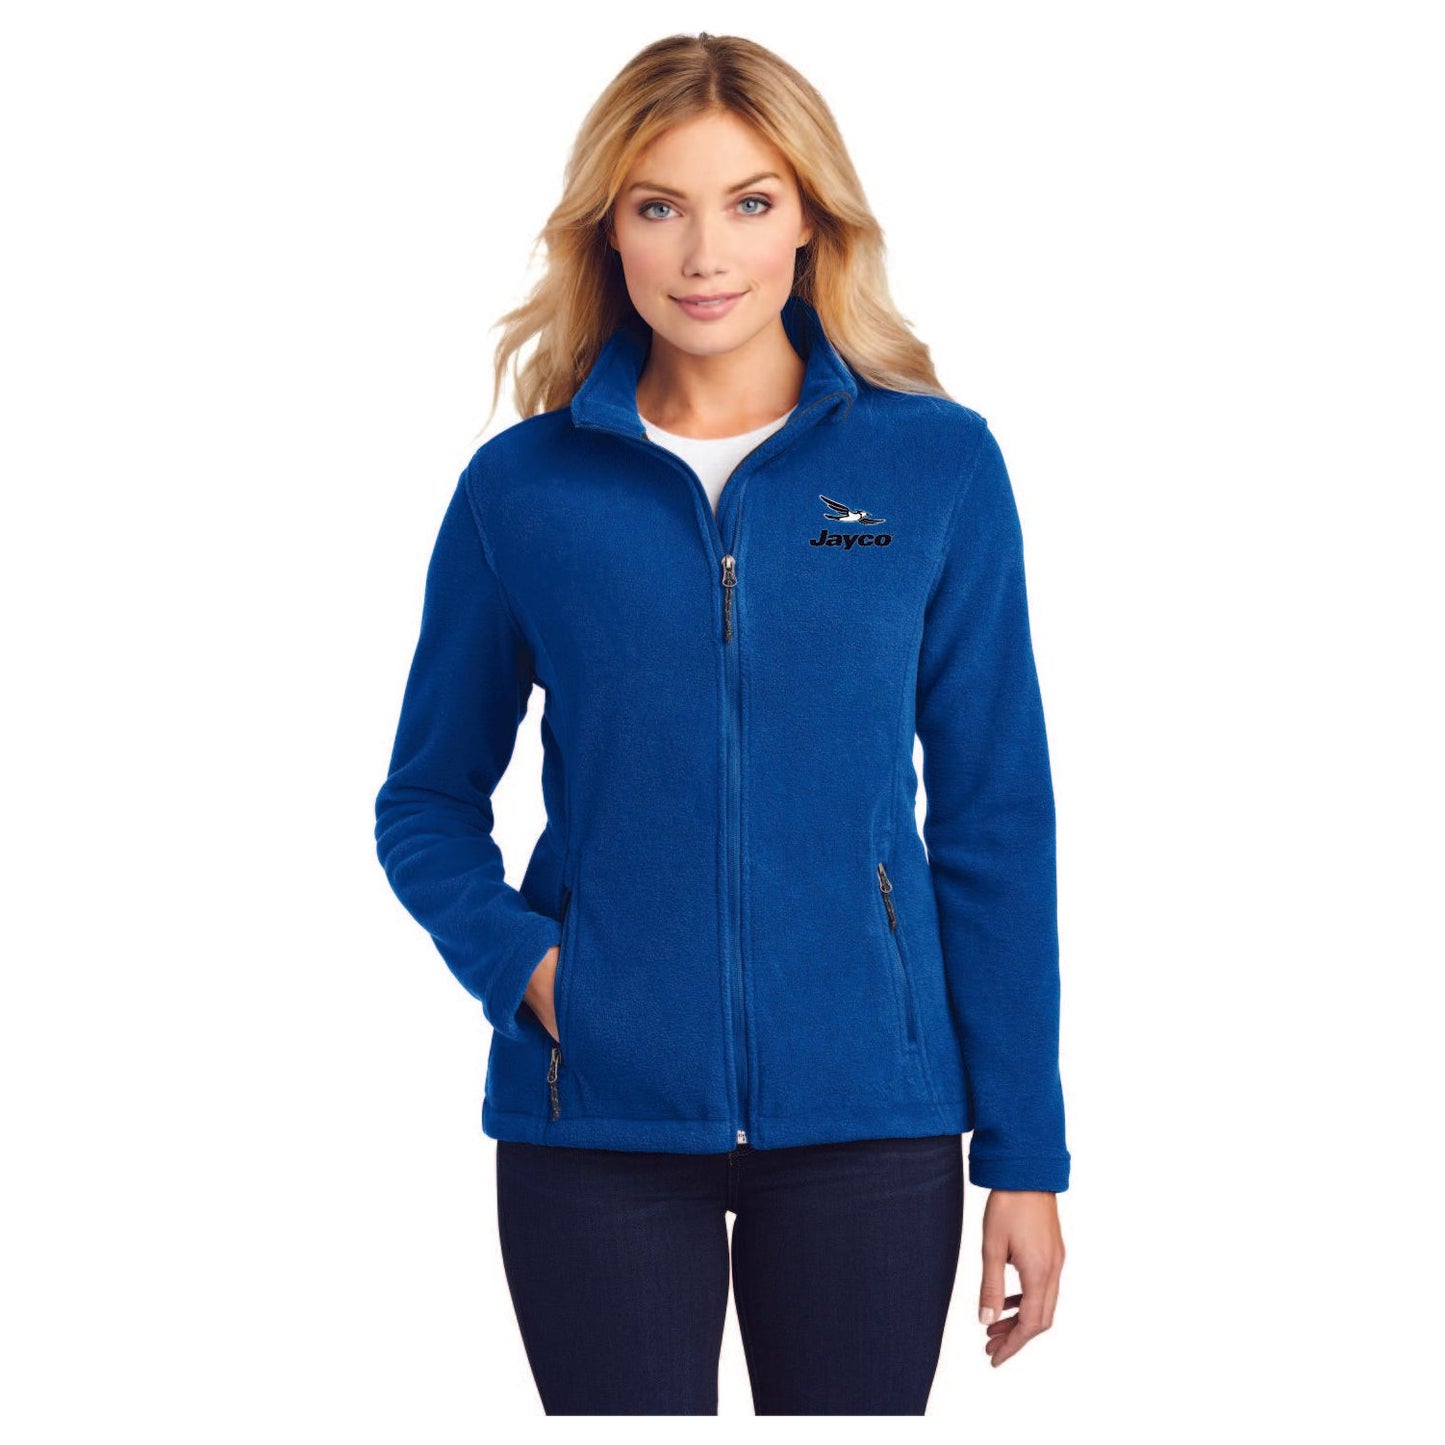 Port Authority Ladies Value Fleece Jacket - L217